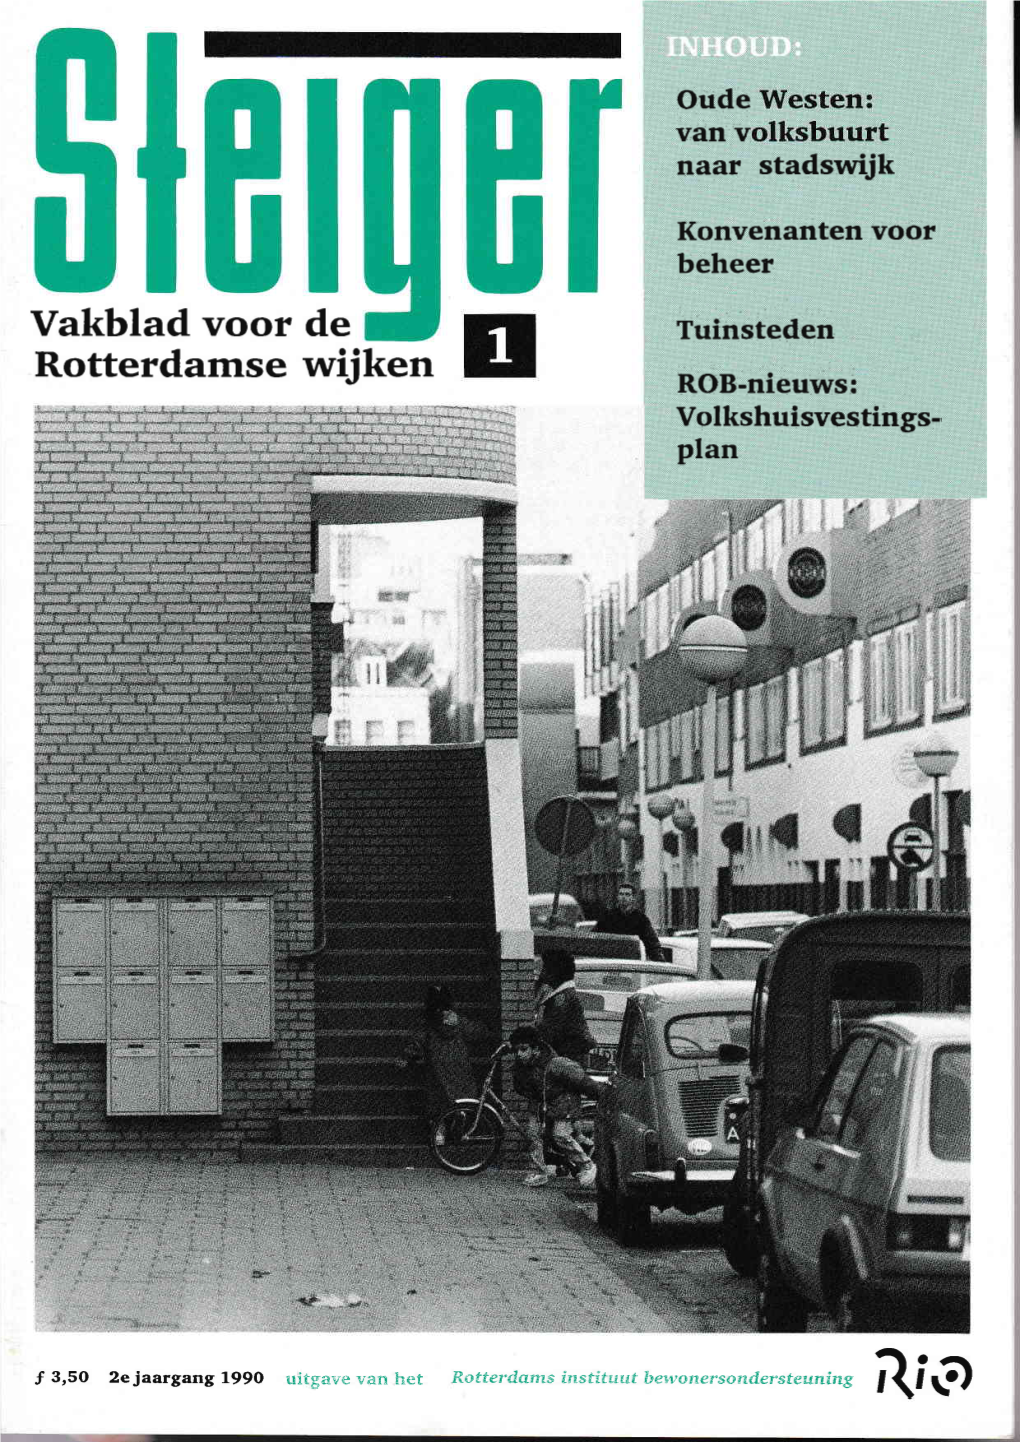 Vakblad Voor Rotterdamse